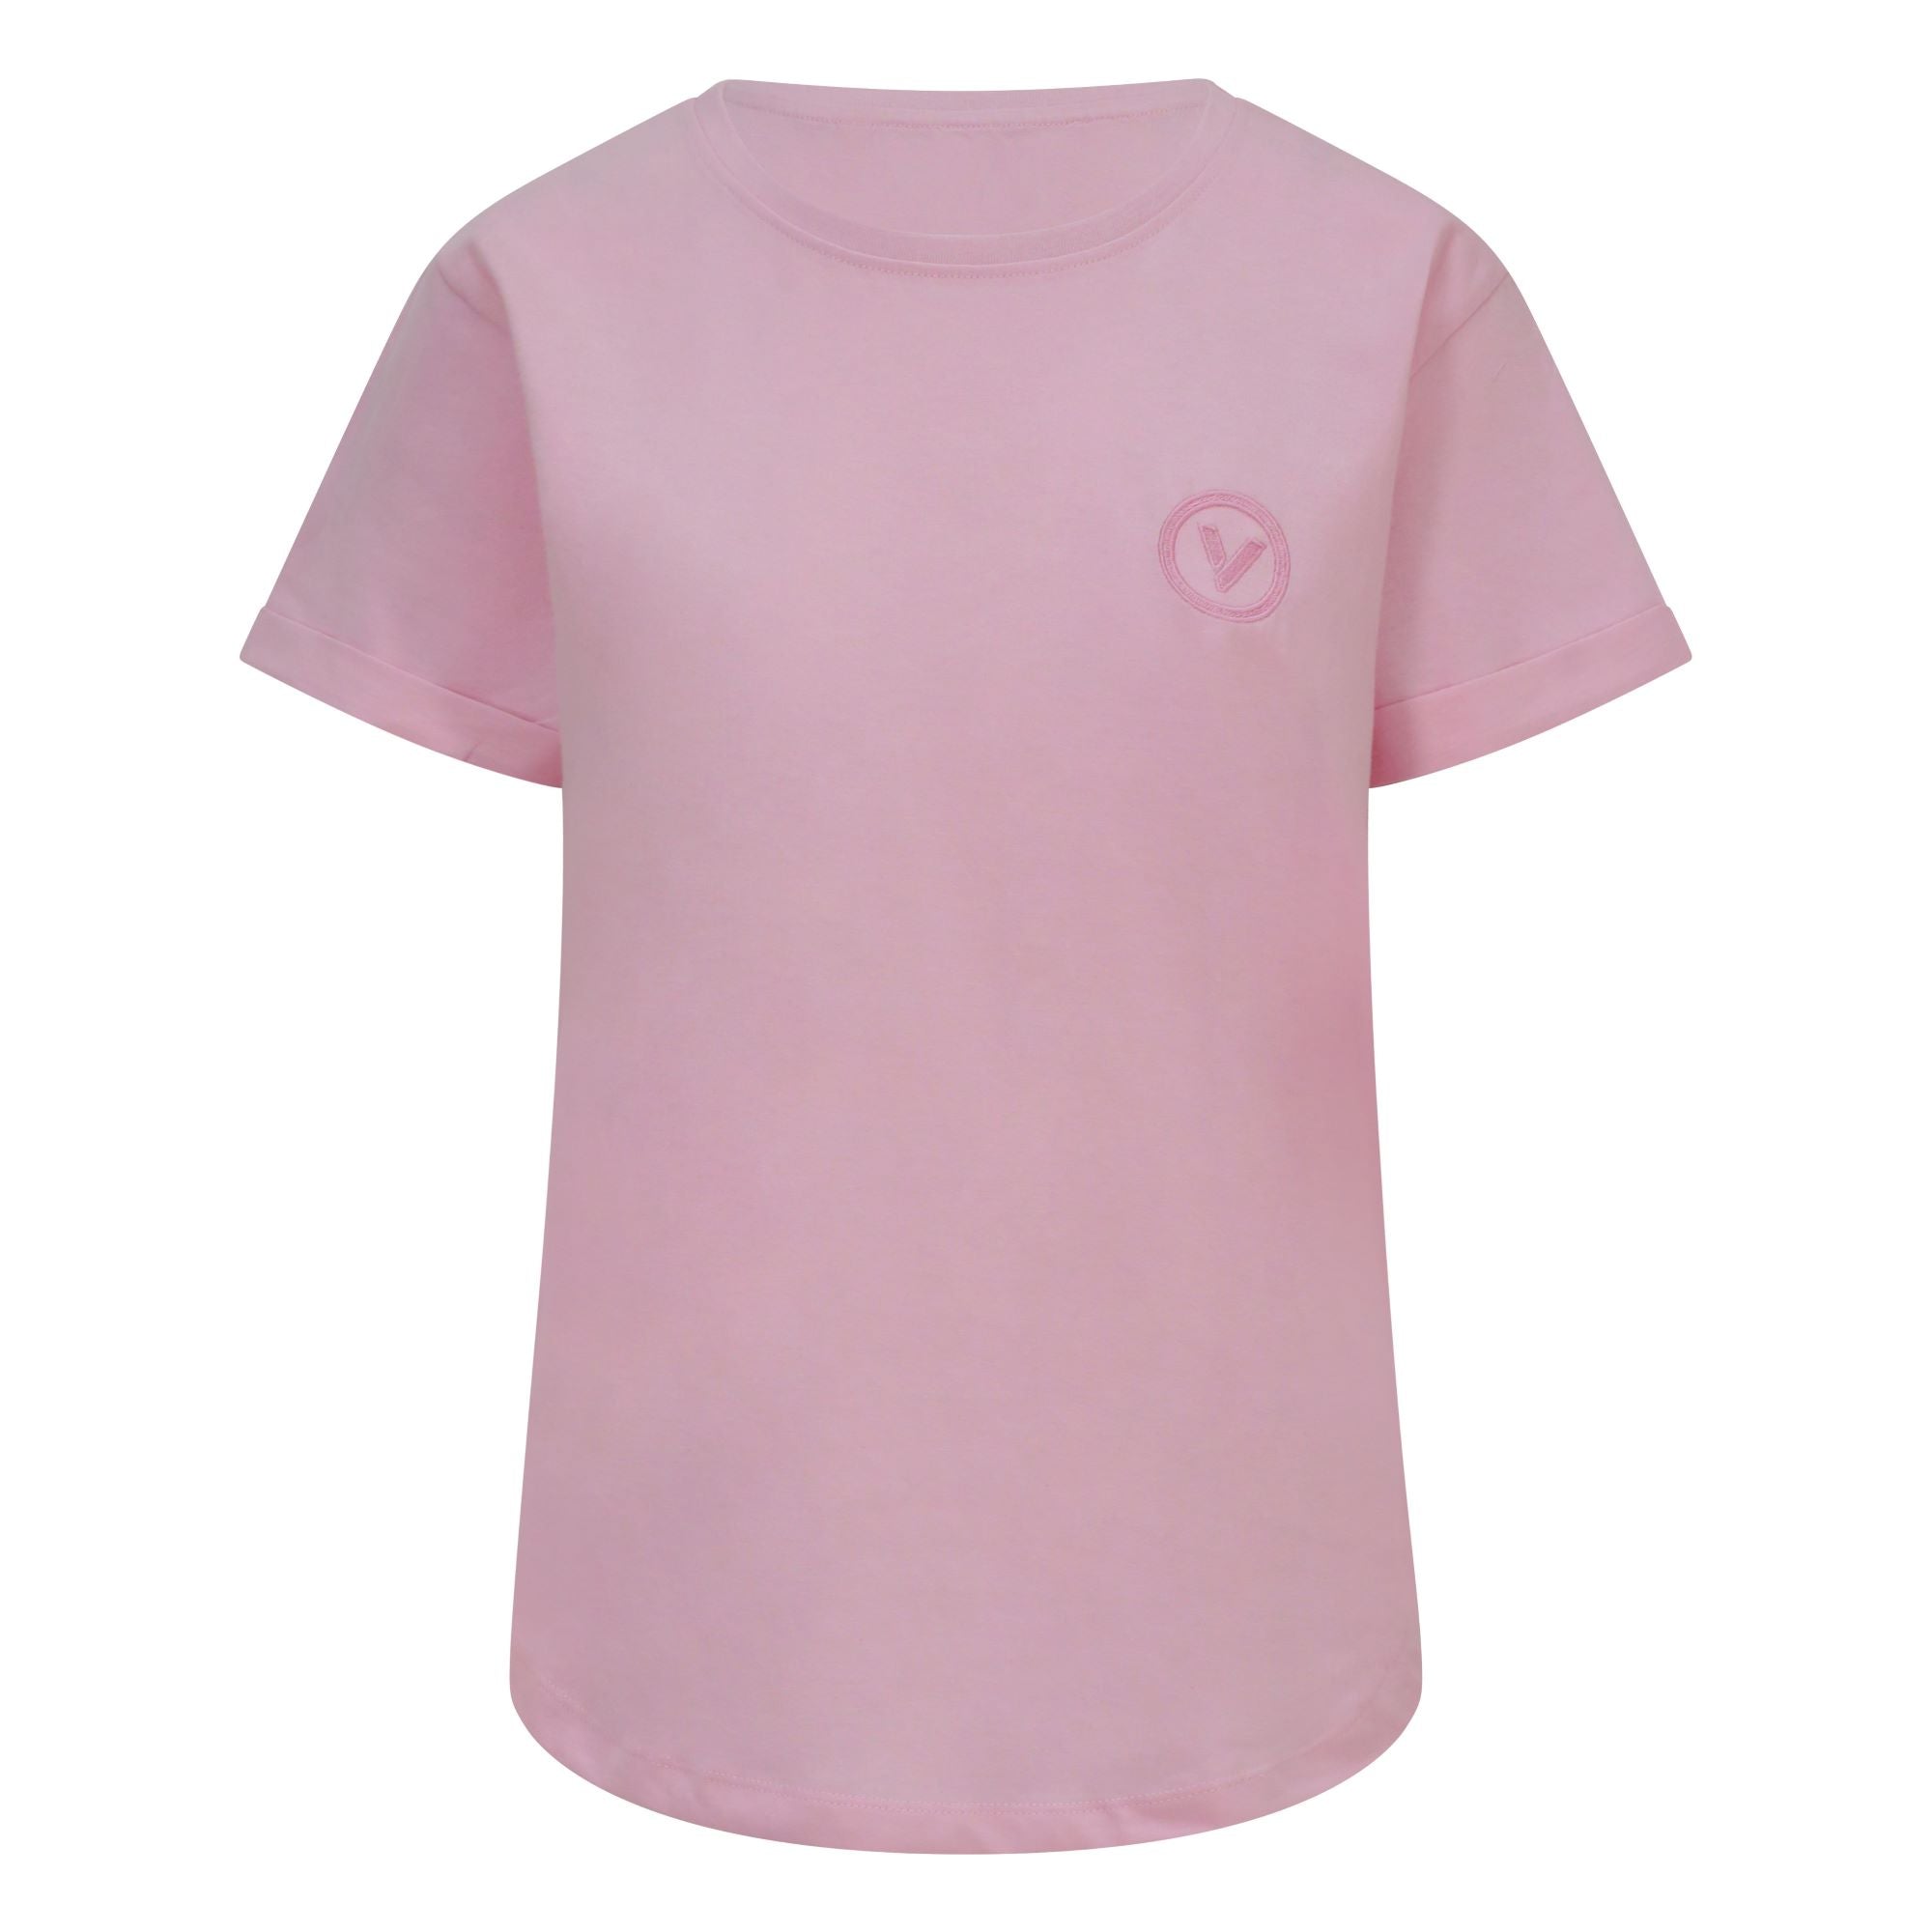 Validate Core Essentials Women's Rolled Sleeve T-Shirt Light Pink